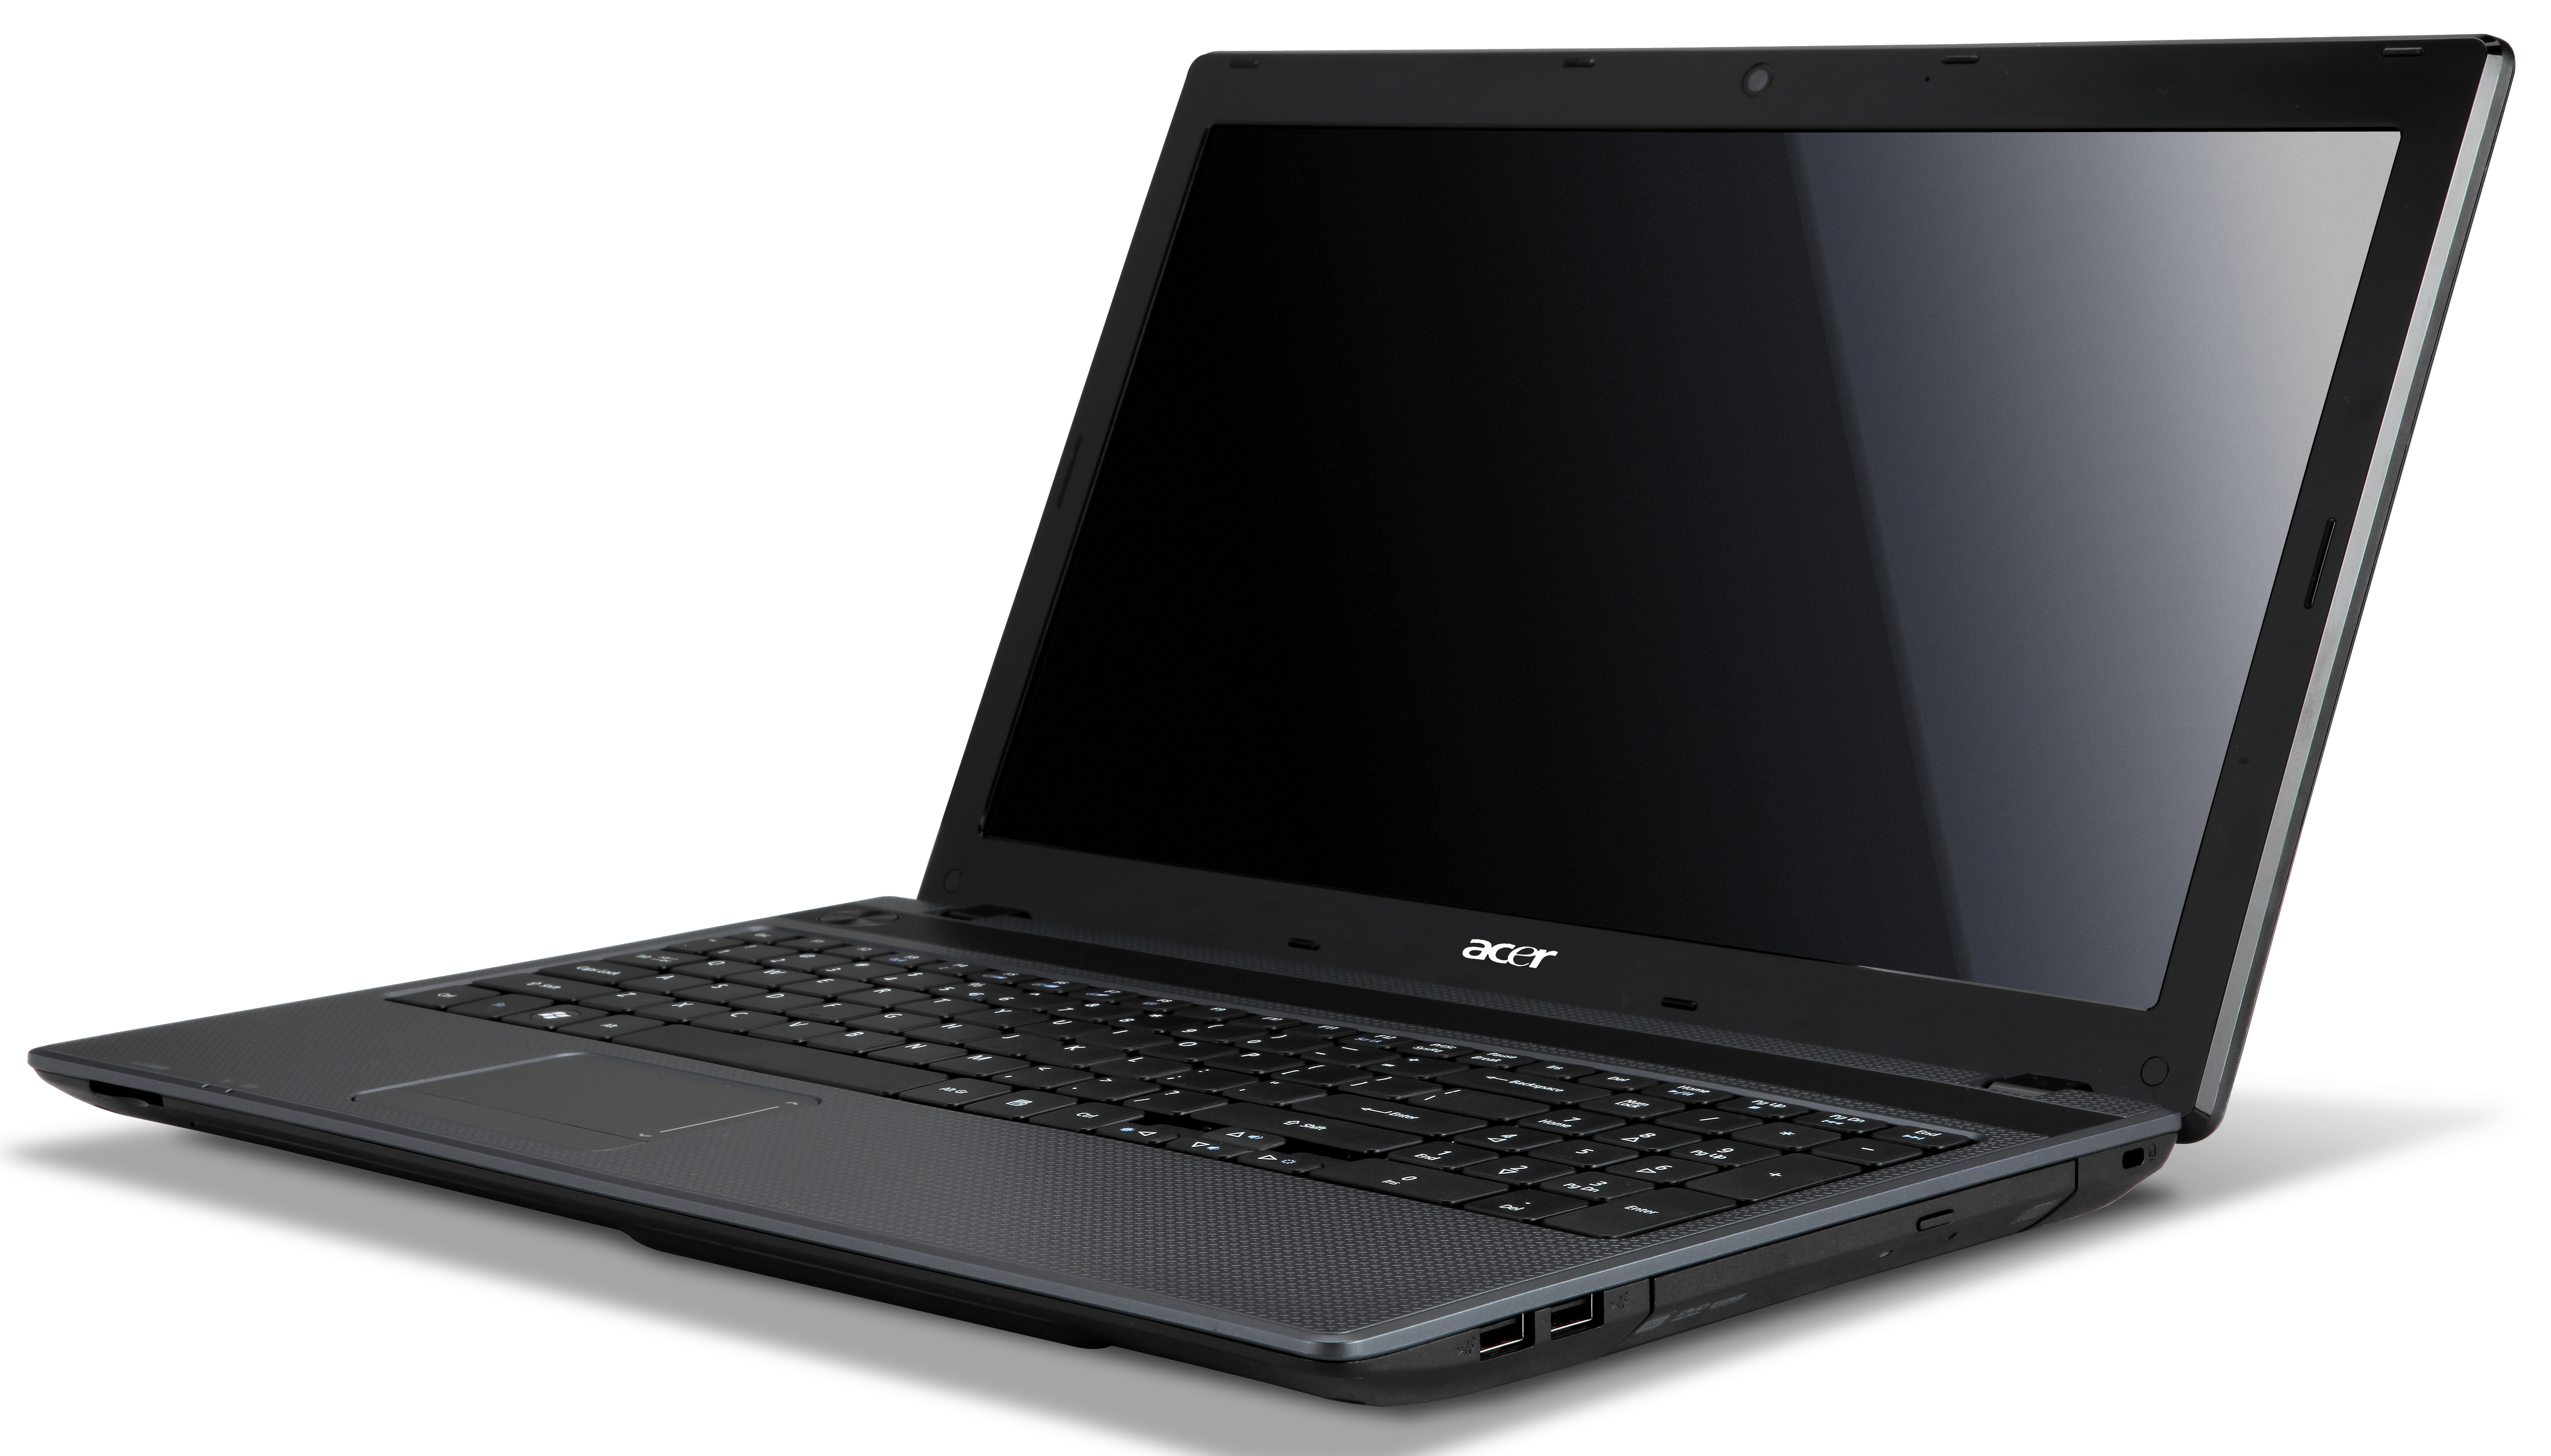 Ноутбуки асер отзывы. Ноутбук Acer TRAVELMATE 5744-382g32mnkk. Acer Aspire 5733z. Ноутбук Acer Aspire 5349-b812g50mnkk. Acer 5733z p622g32.